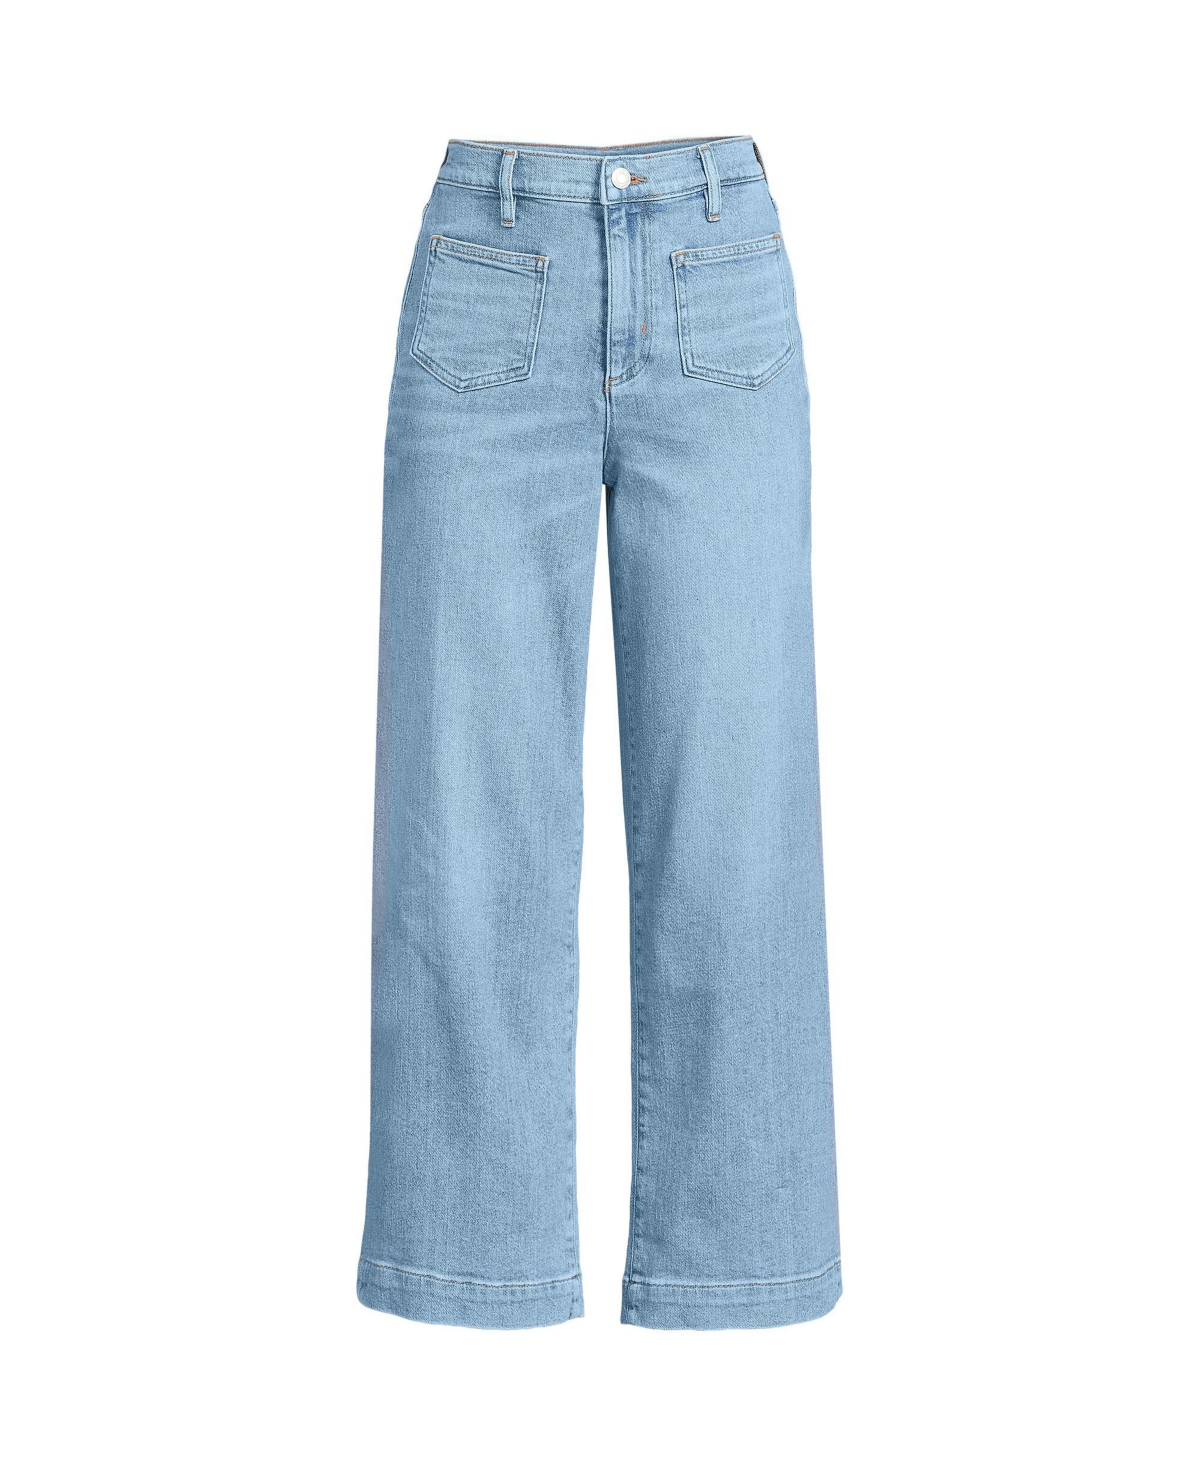 Women's Denim High Rise Patch Pocket Crop Jeans - River rinse